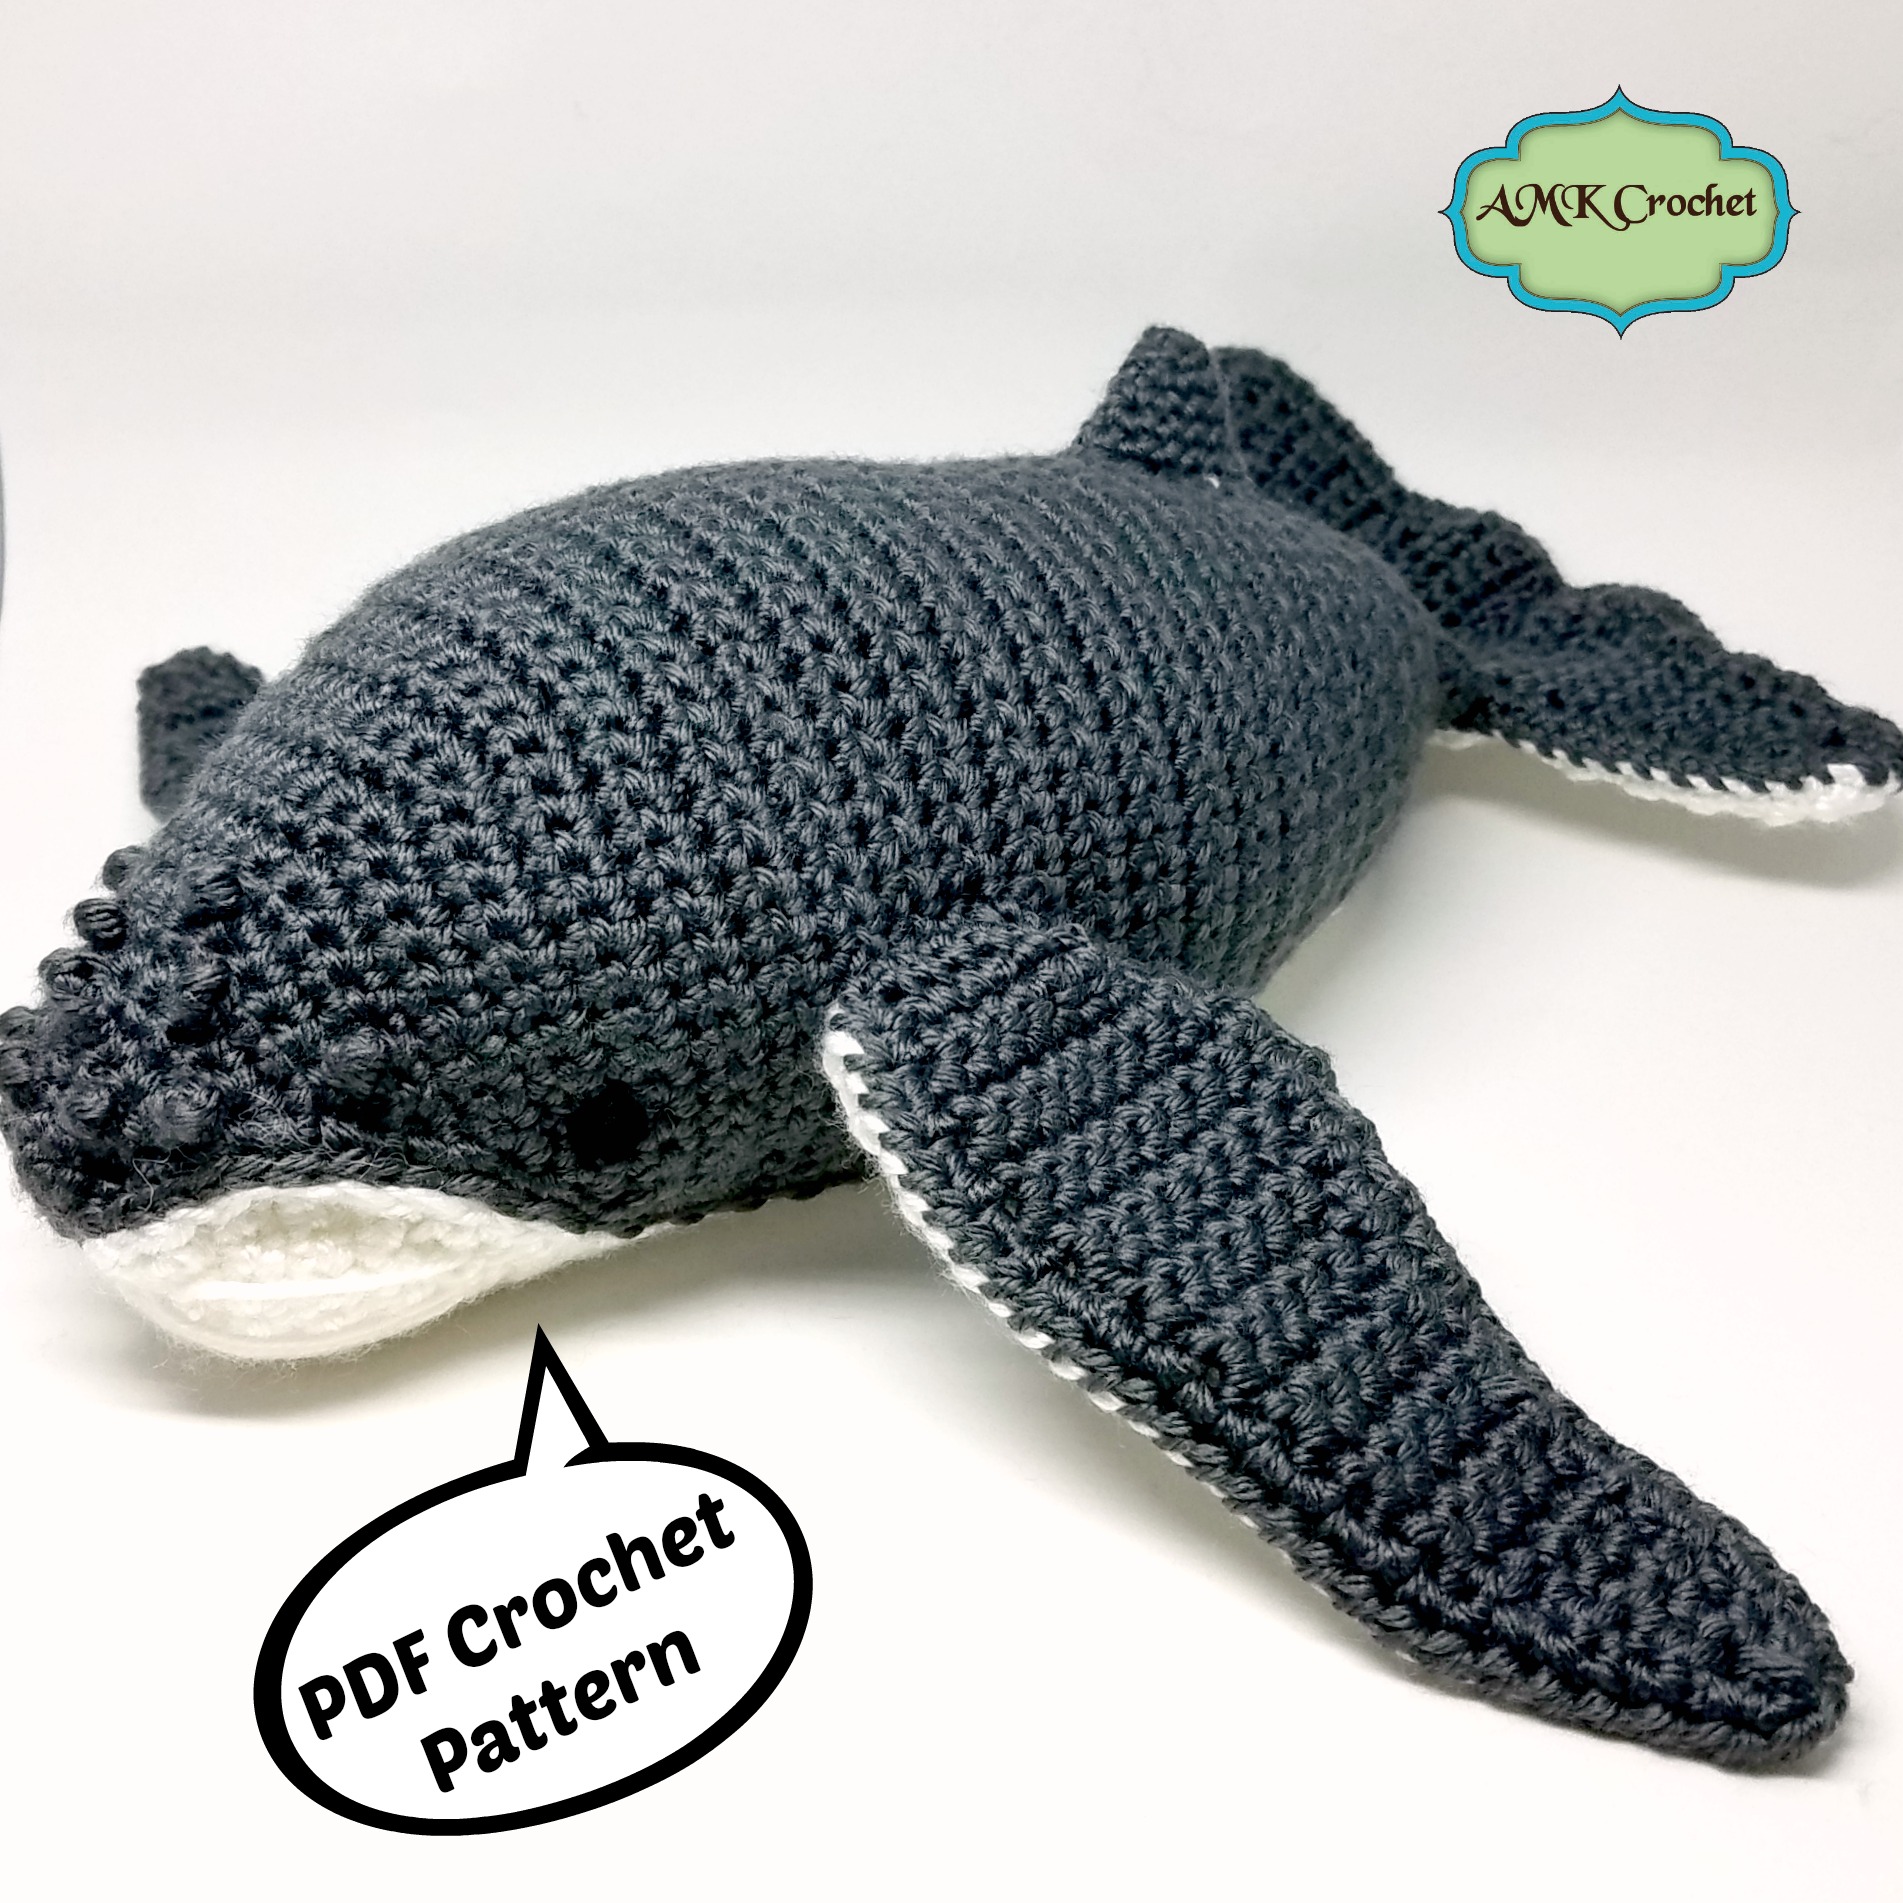 Humpback whale crochet pattern